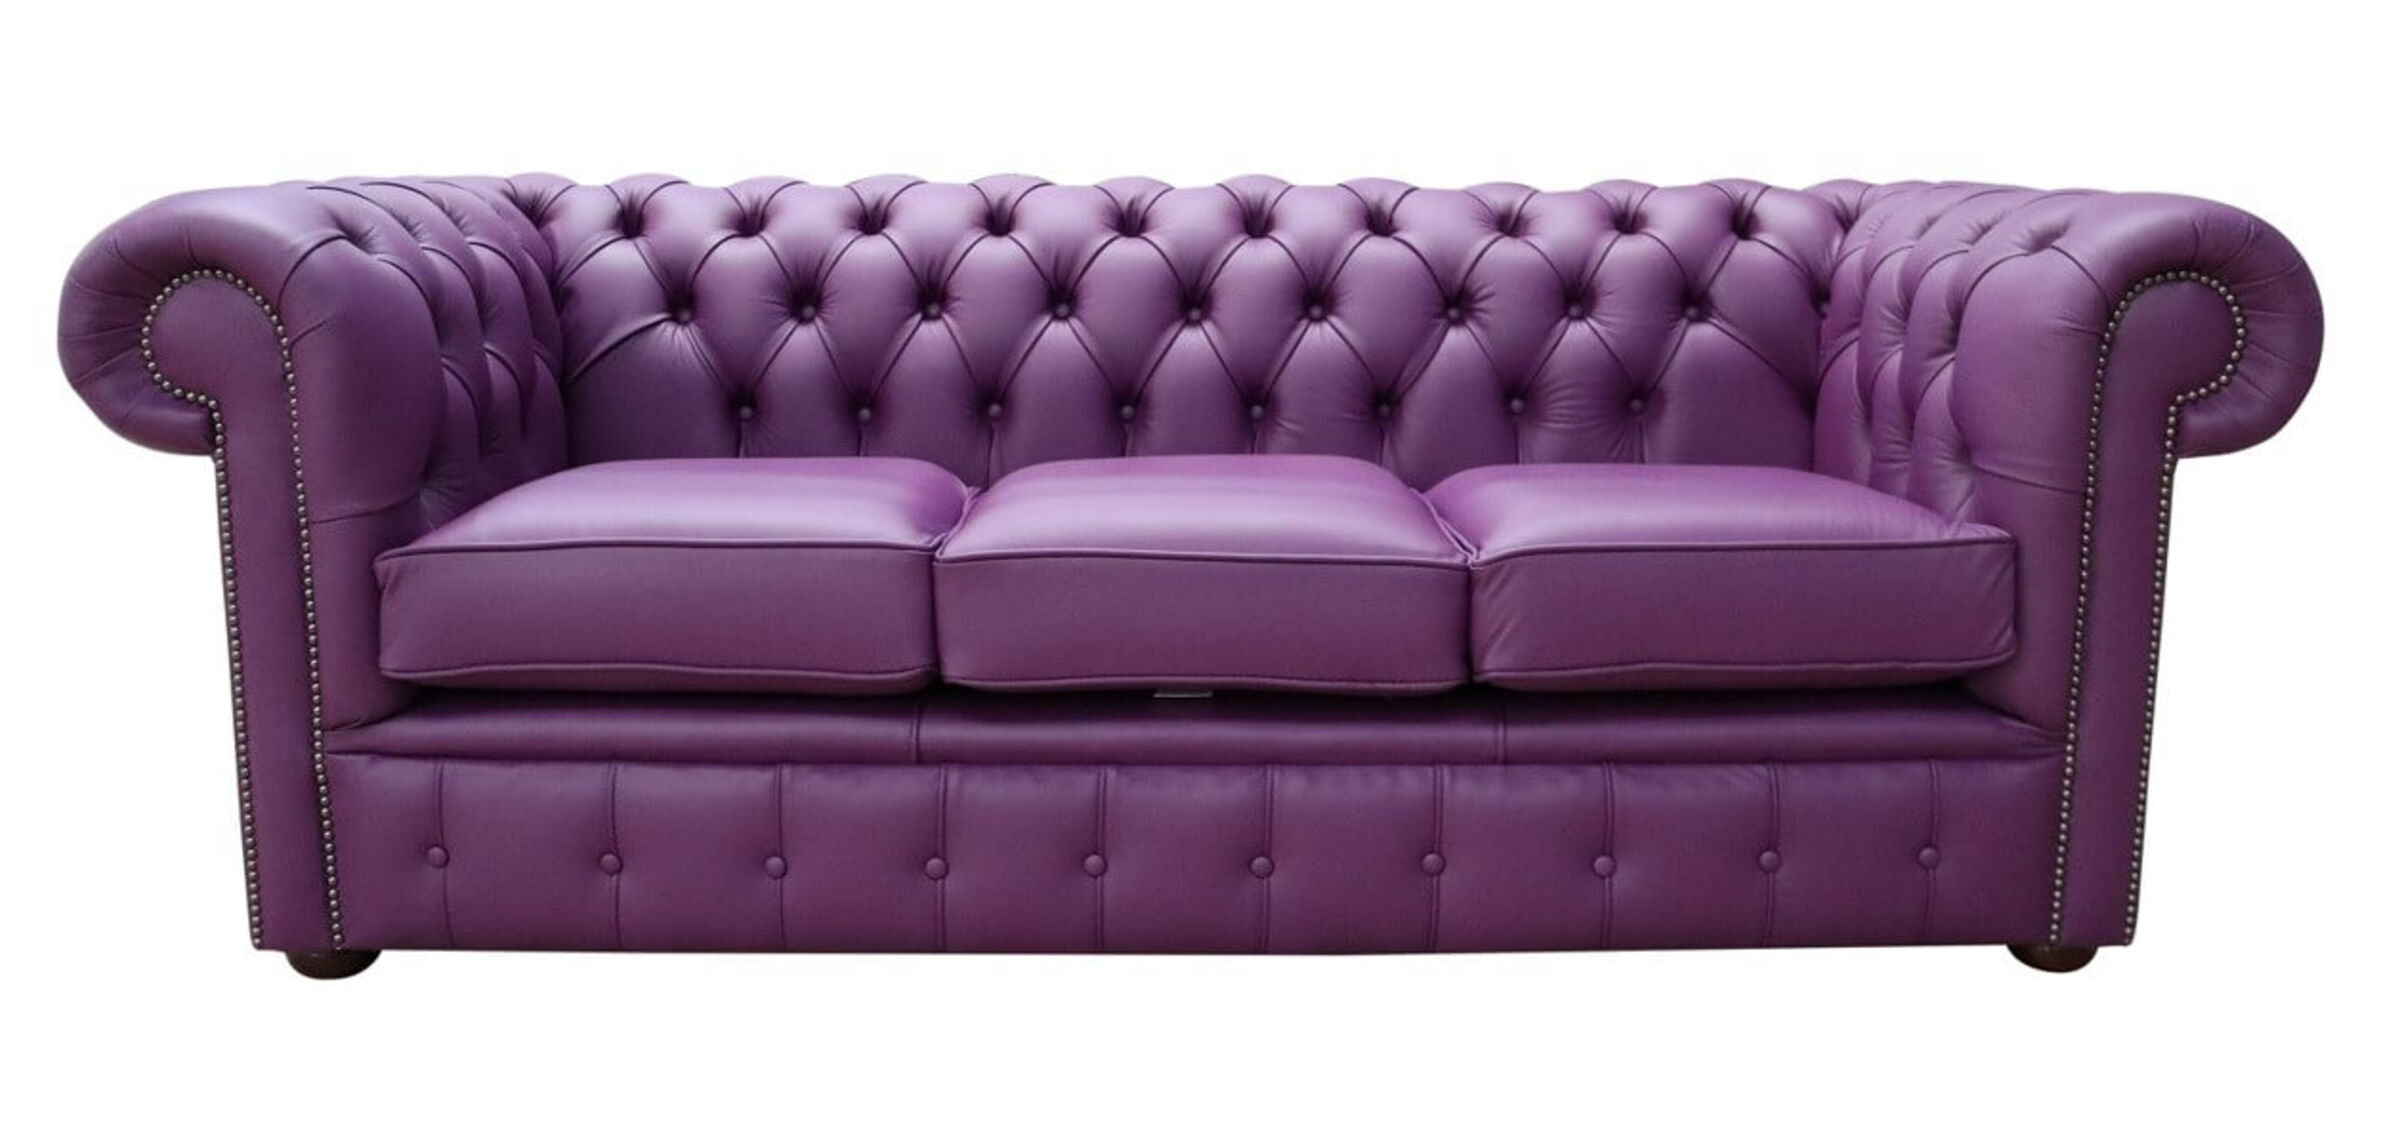 purple leather sofa uk